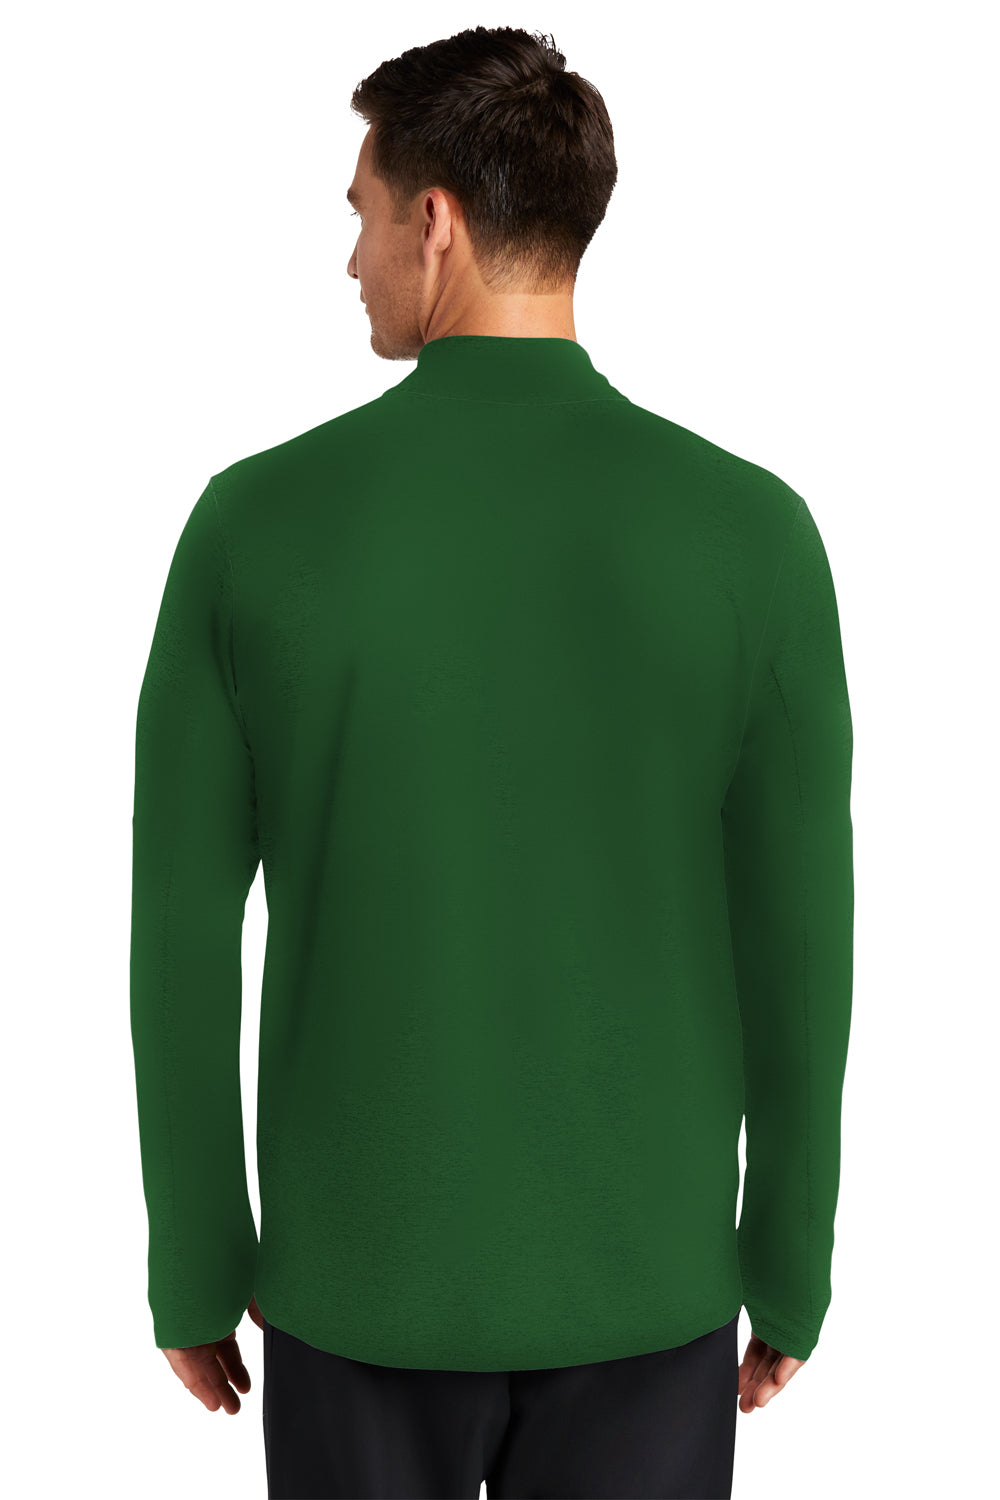 Nike NKDH4949 Mens Element Dri-Fit Moisture Wicking 1/4 Zip Sweatshirt Dark Green Model Back